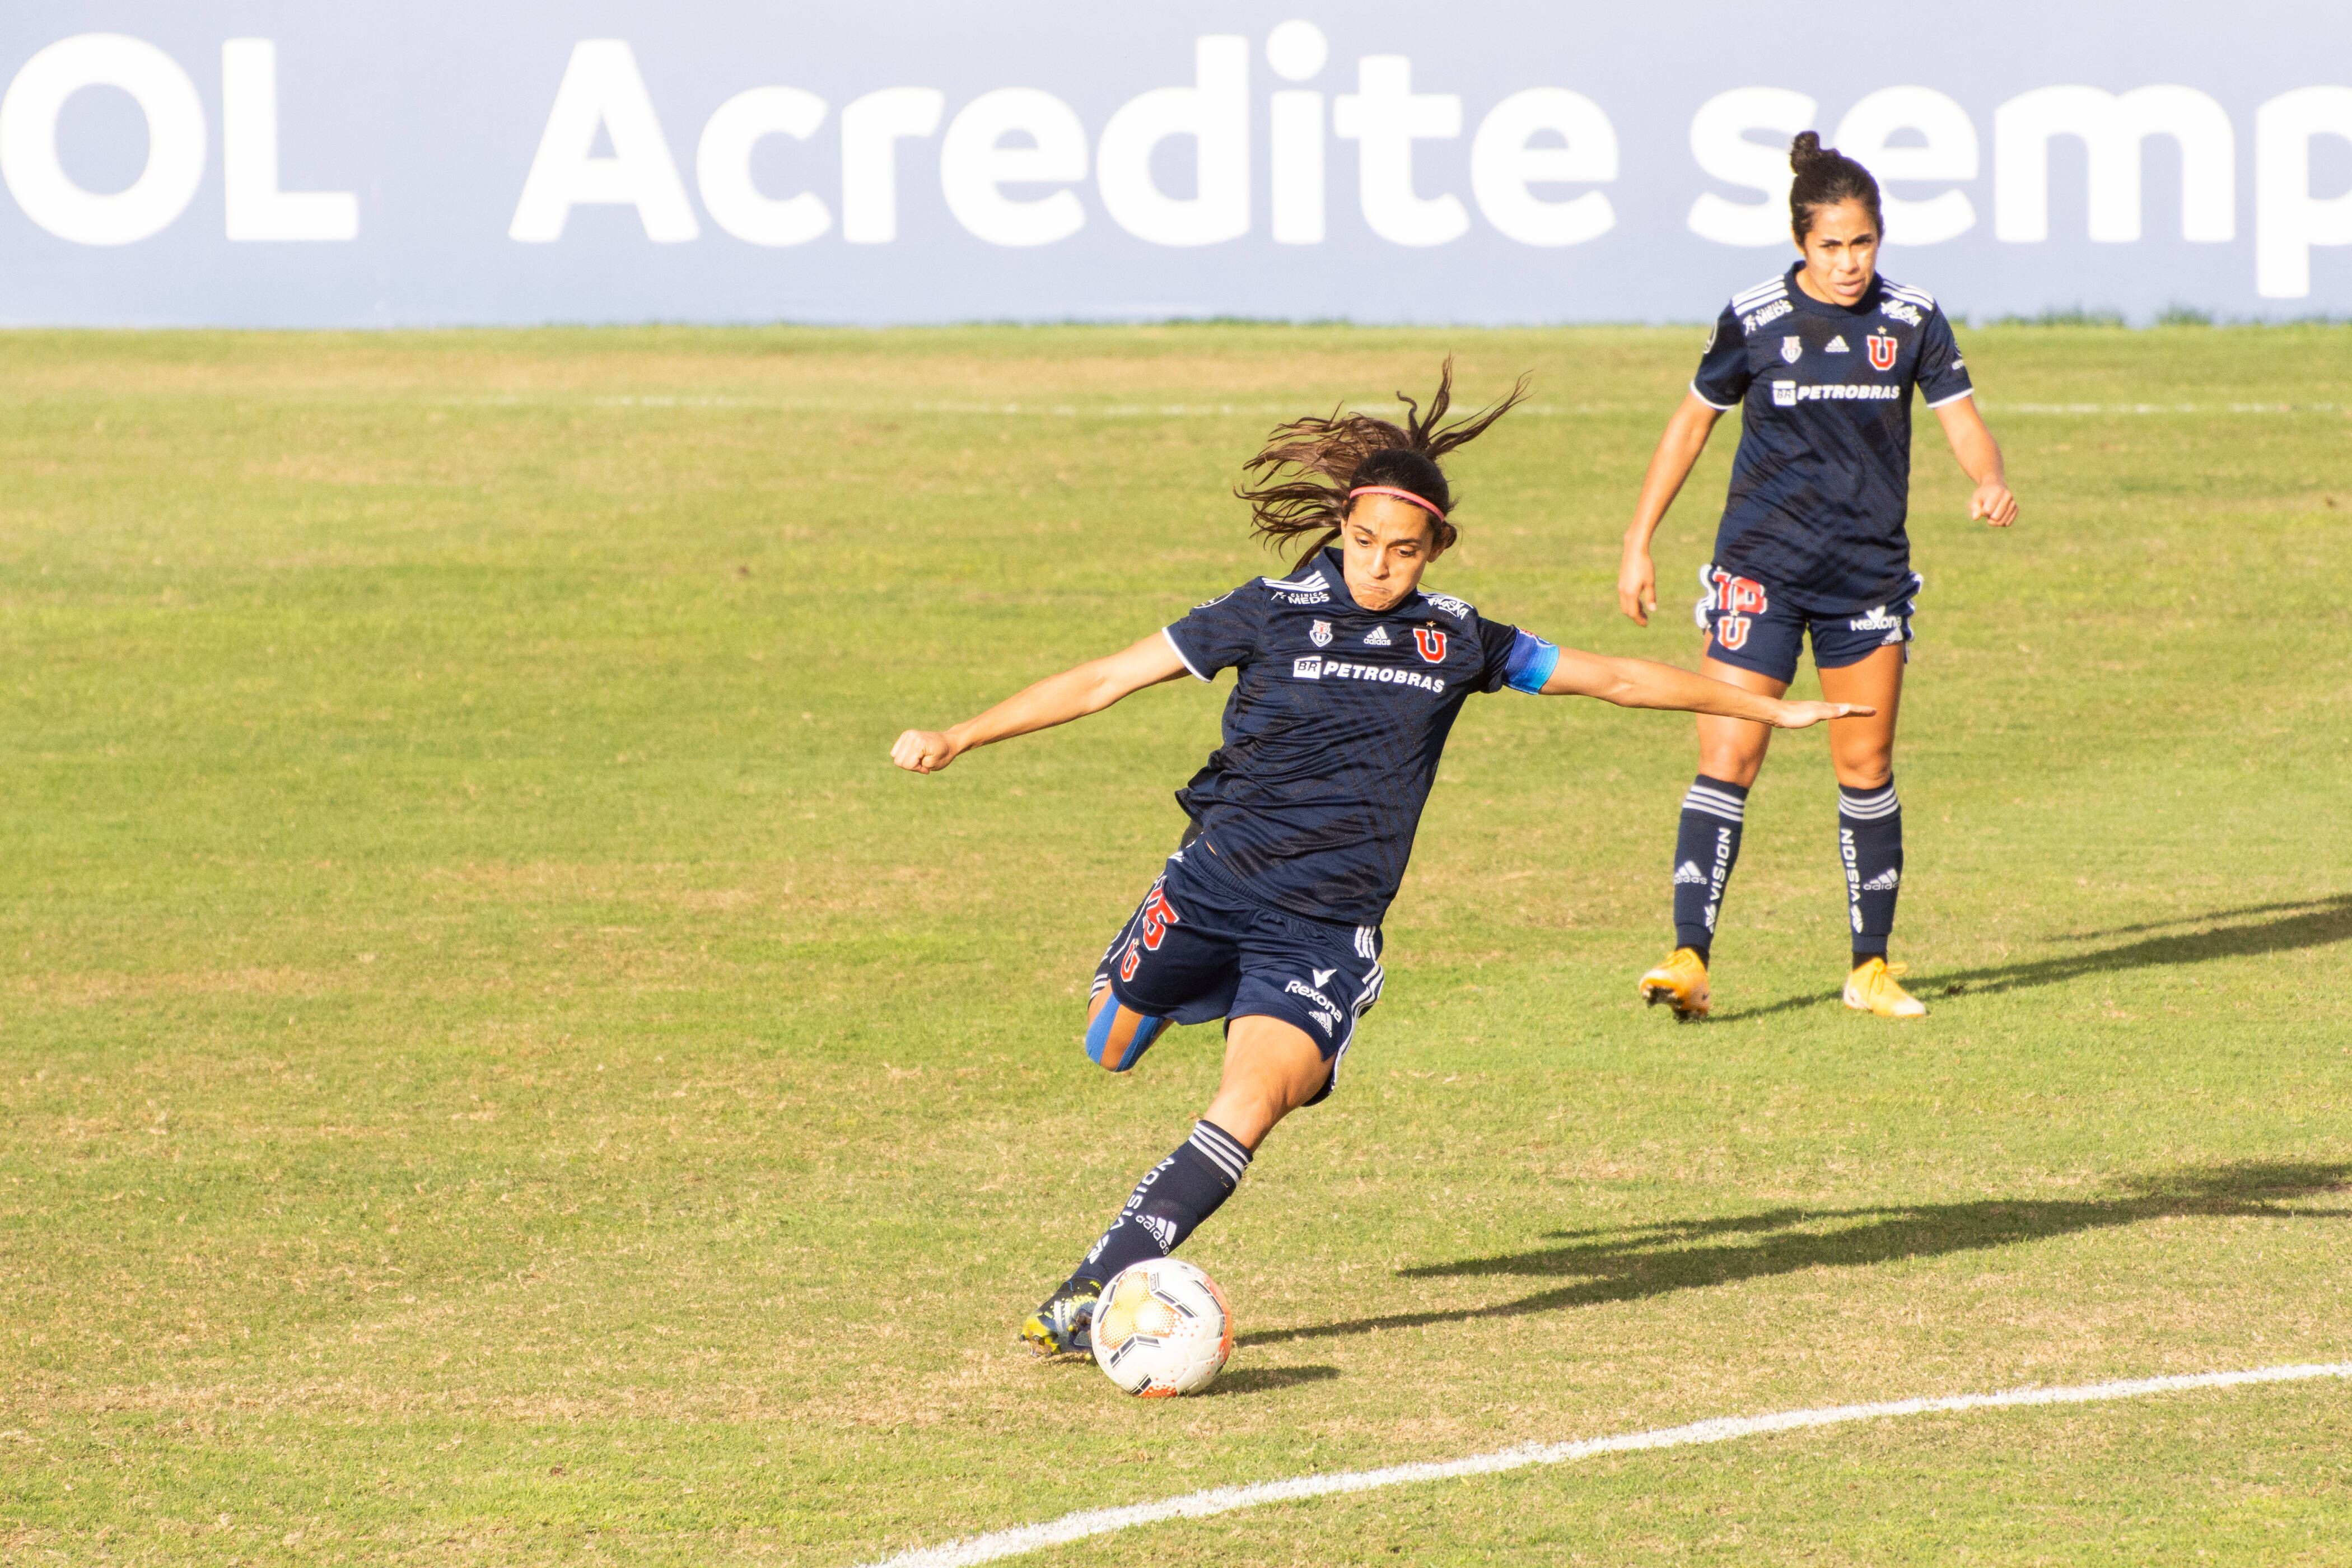 Moron, Argentina, March 18 2021: Daniela Zamora ( 15 U De Chile) During The Game Between U De Chile And Ferroviaria At N